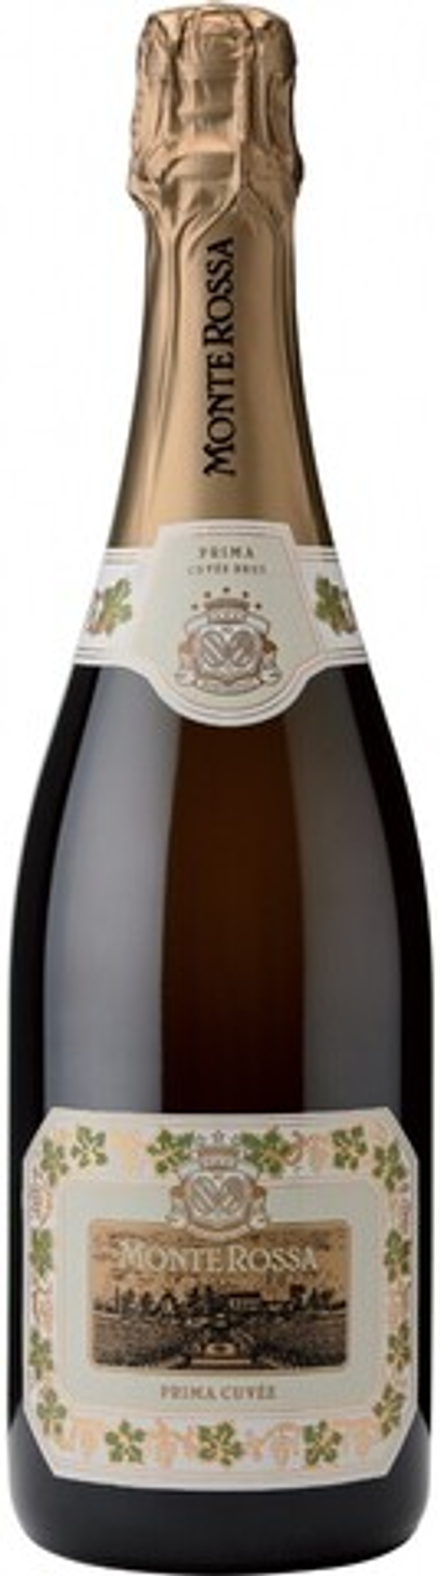 Игристое вино Prima Cuvee Brut Monte Rossa, 0,75 л.